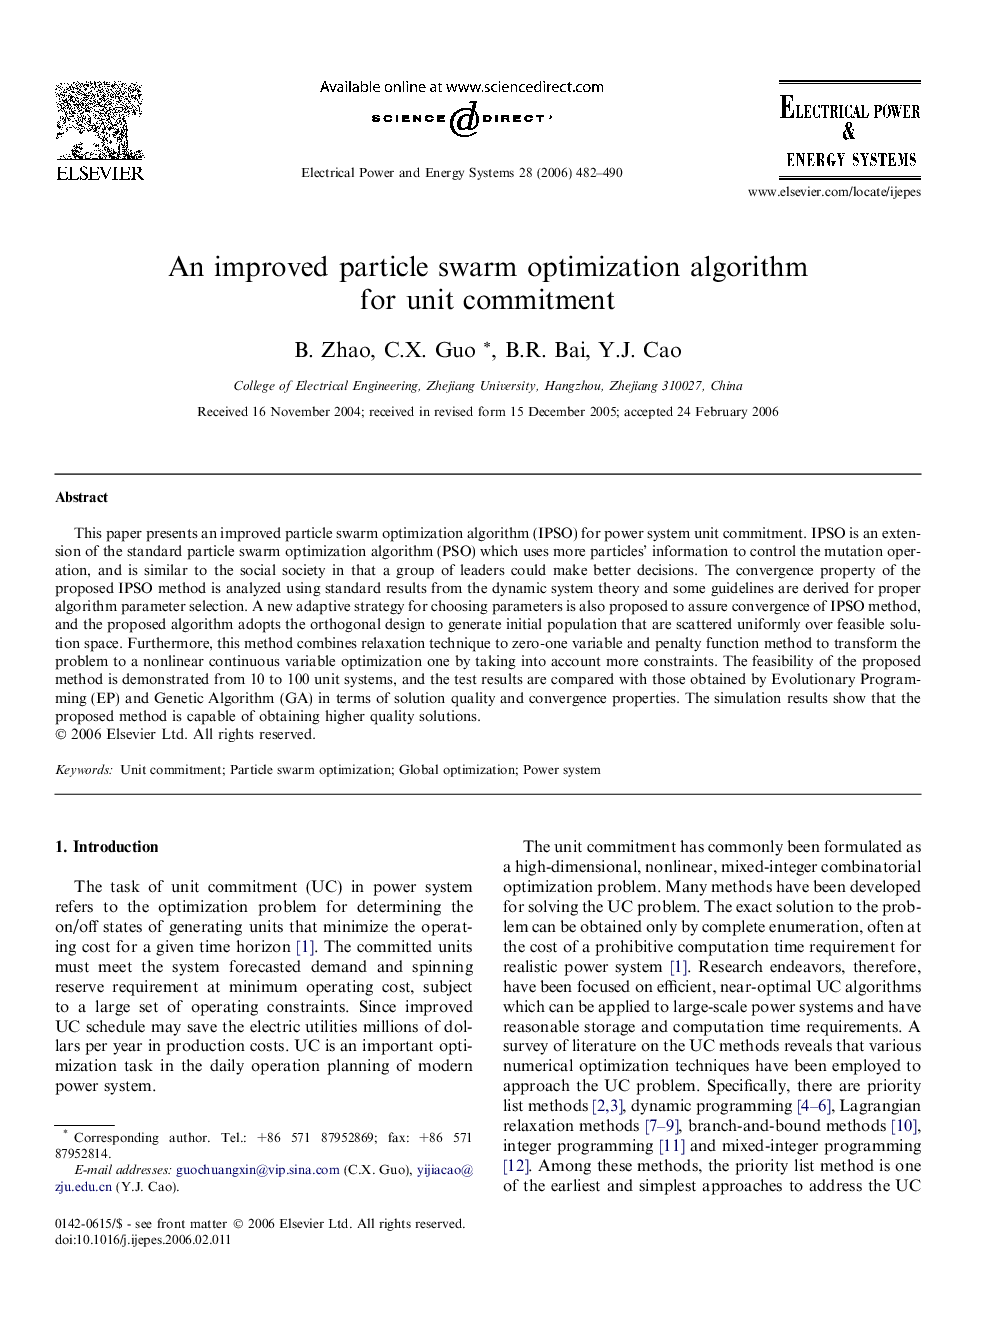 An improved particle swarm optimization algorithm for unit commitment